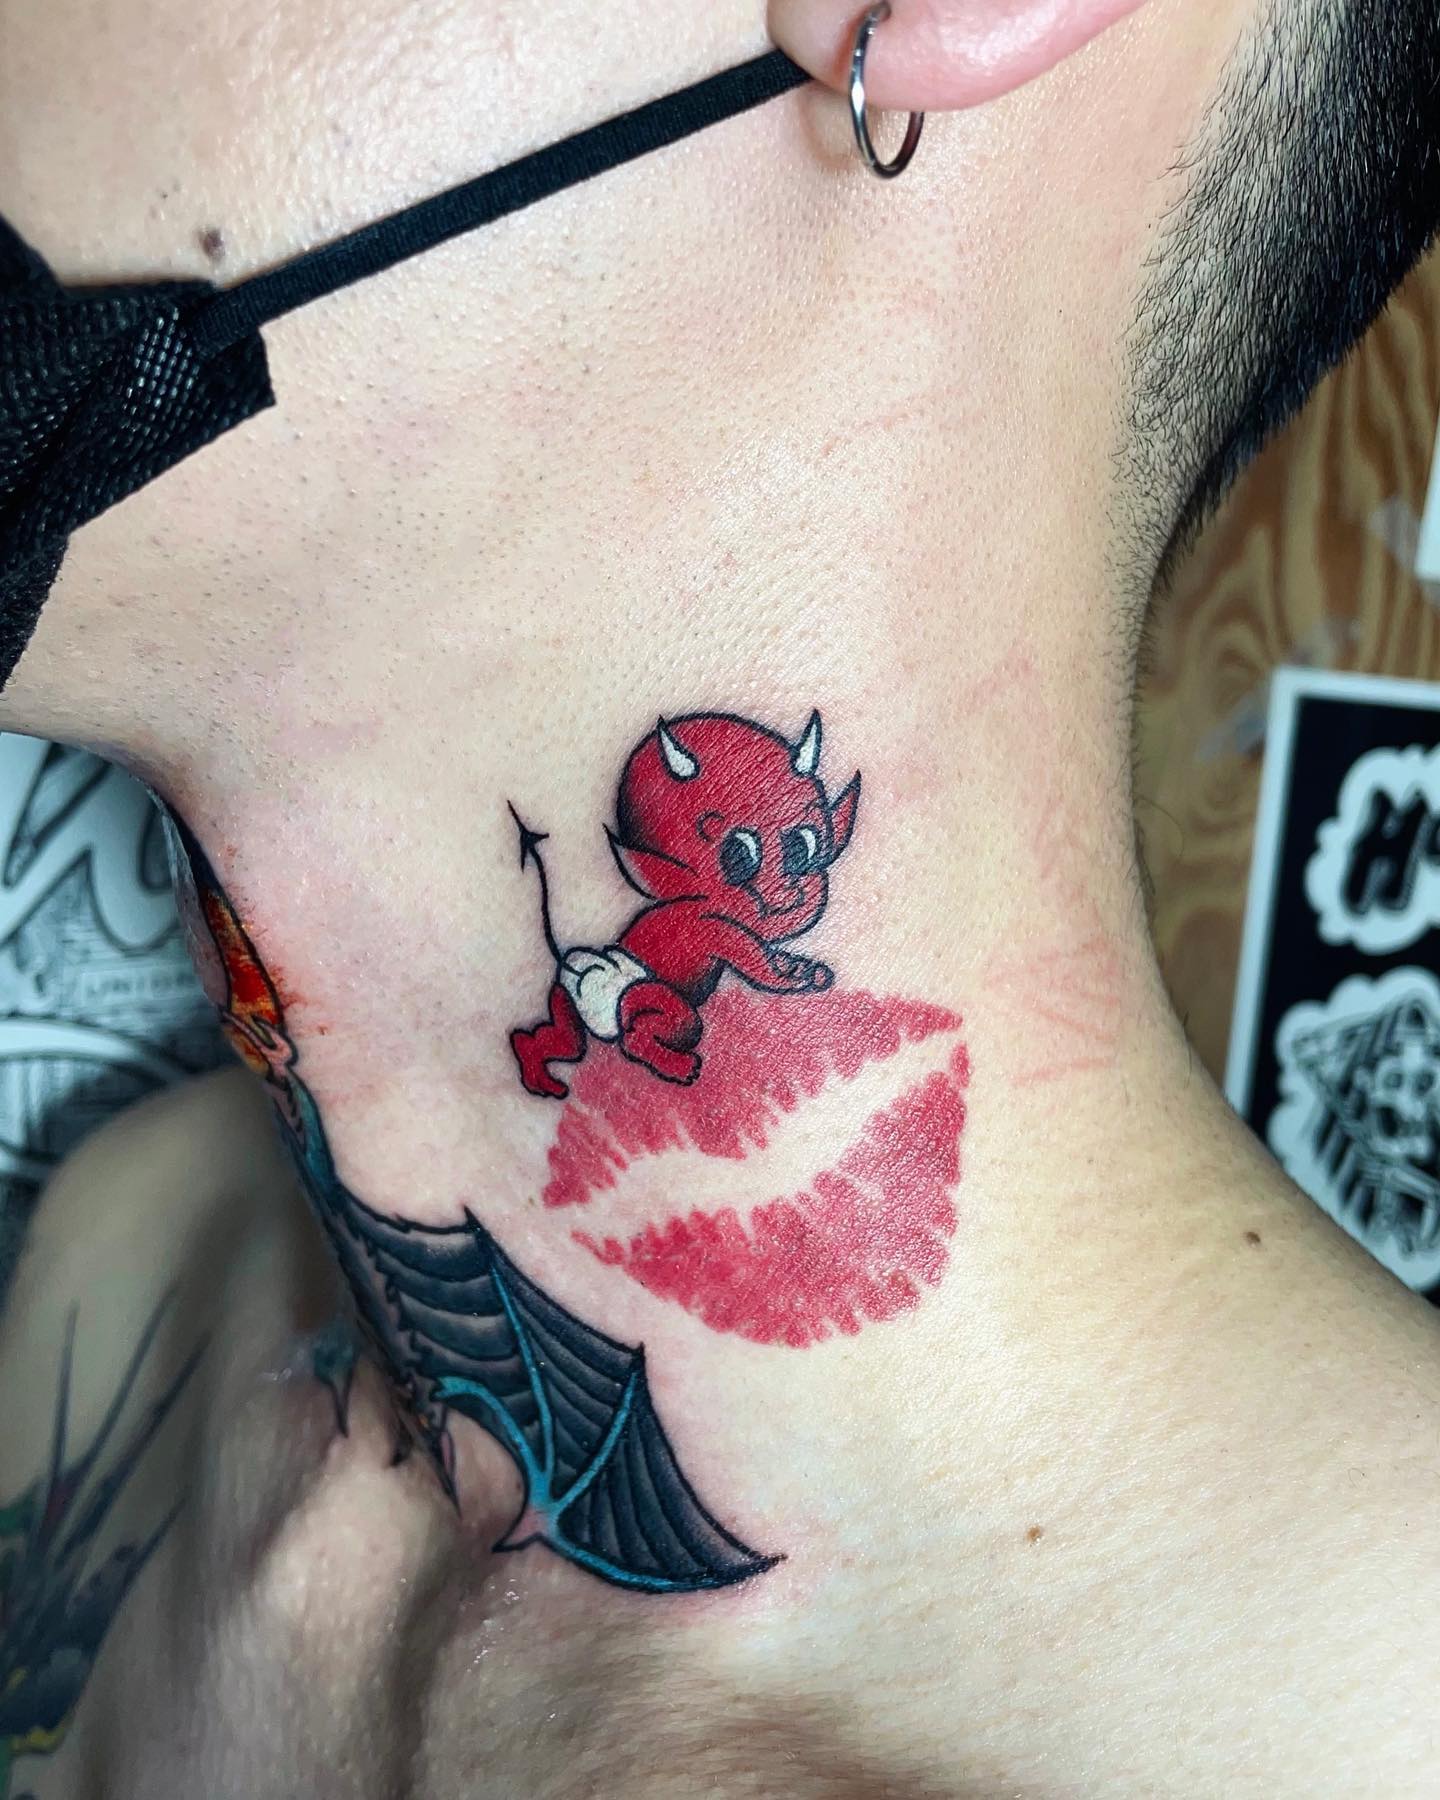 Tatuaje tradicional americano de diablito